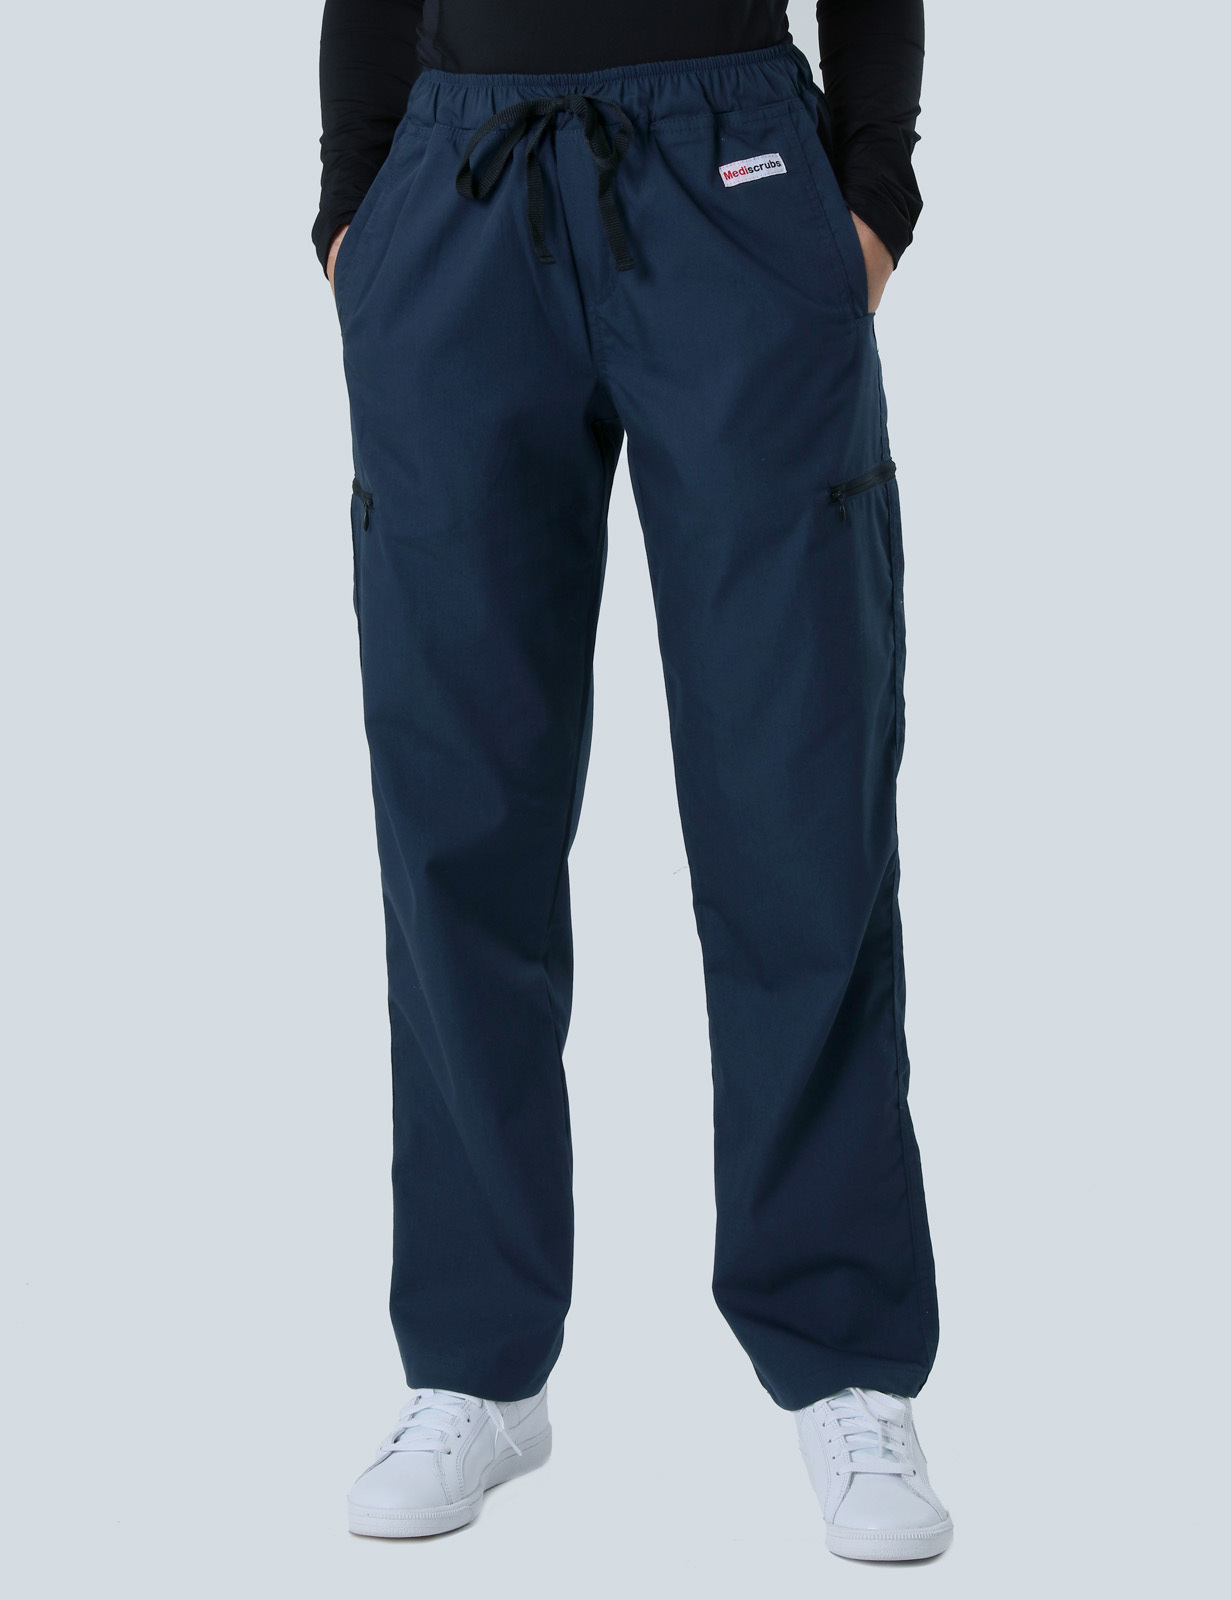 Women's Utility Pants - Navy - 5x Large